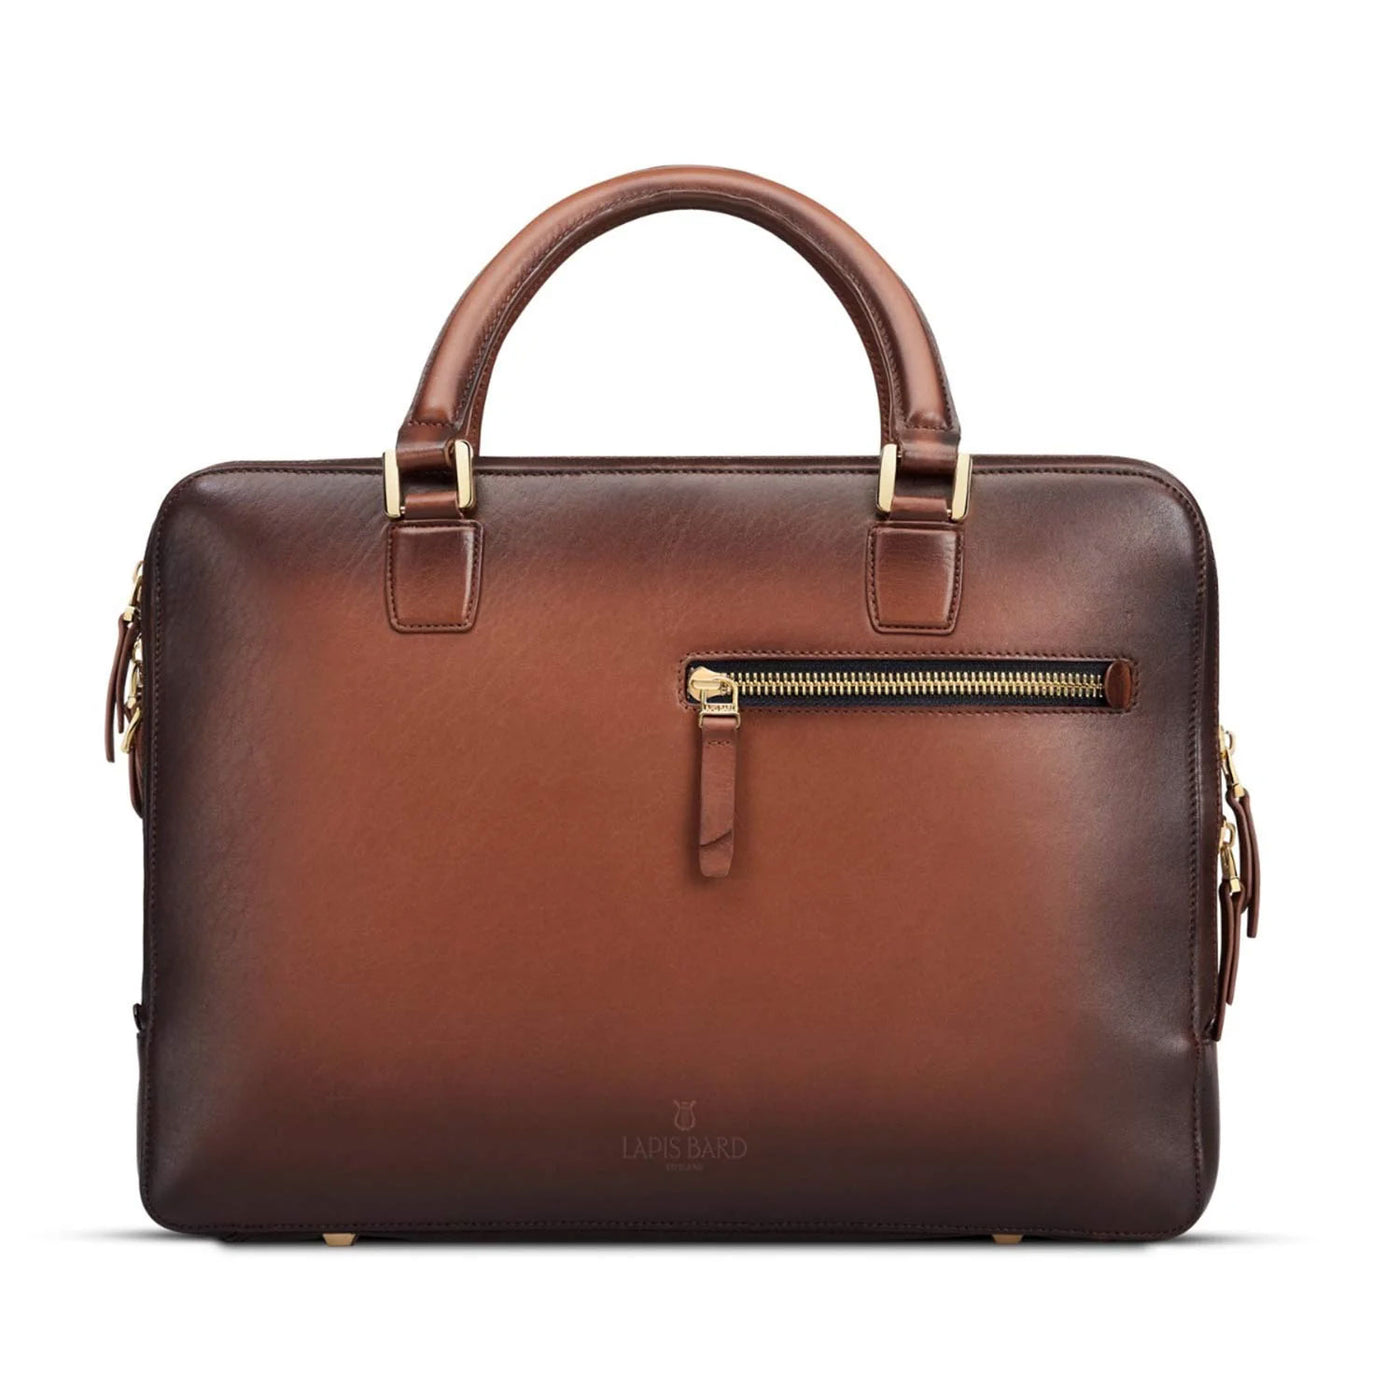 Lapis Bard Ducorium Chester Laptop Business Bag, Cognac - 14" Slim